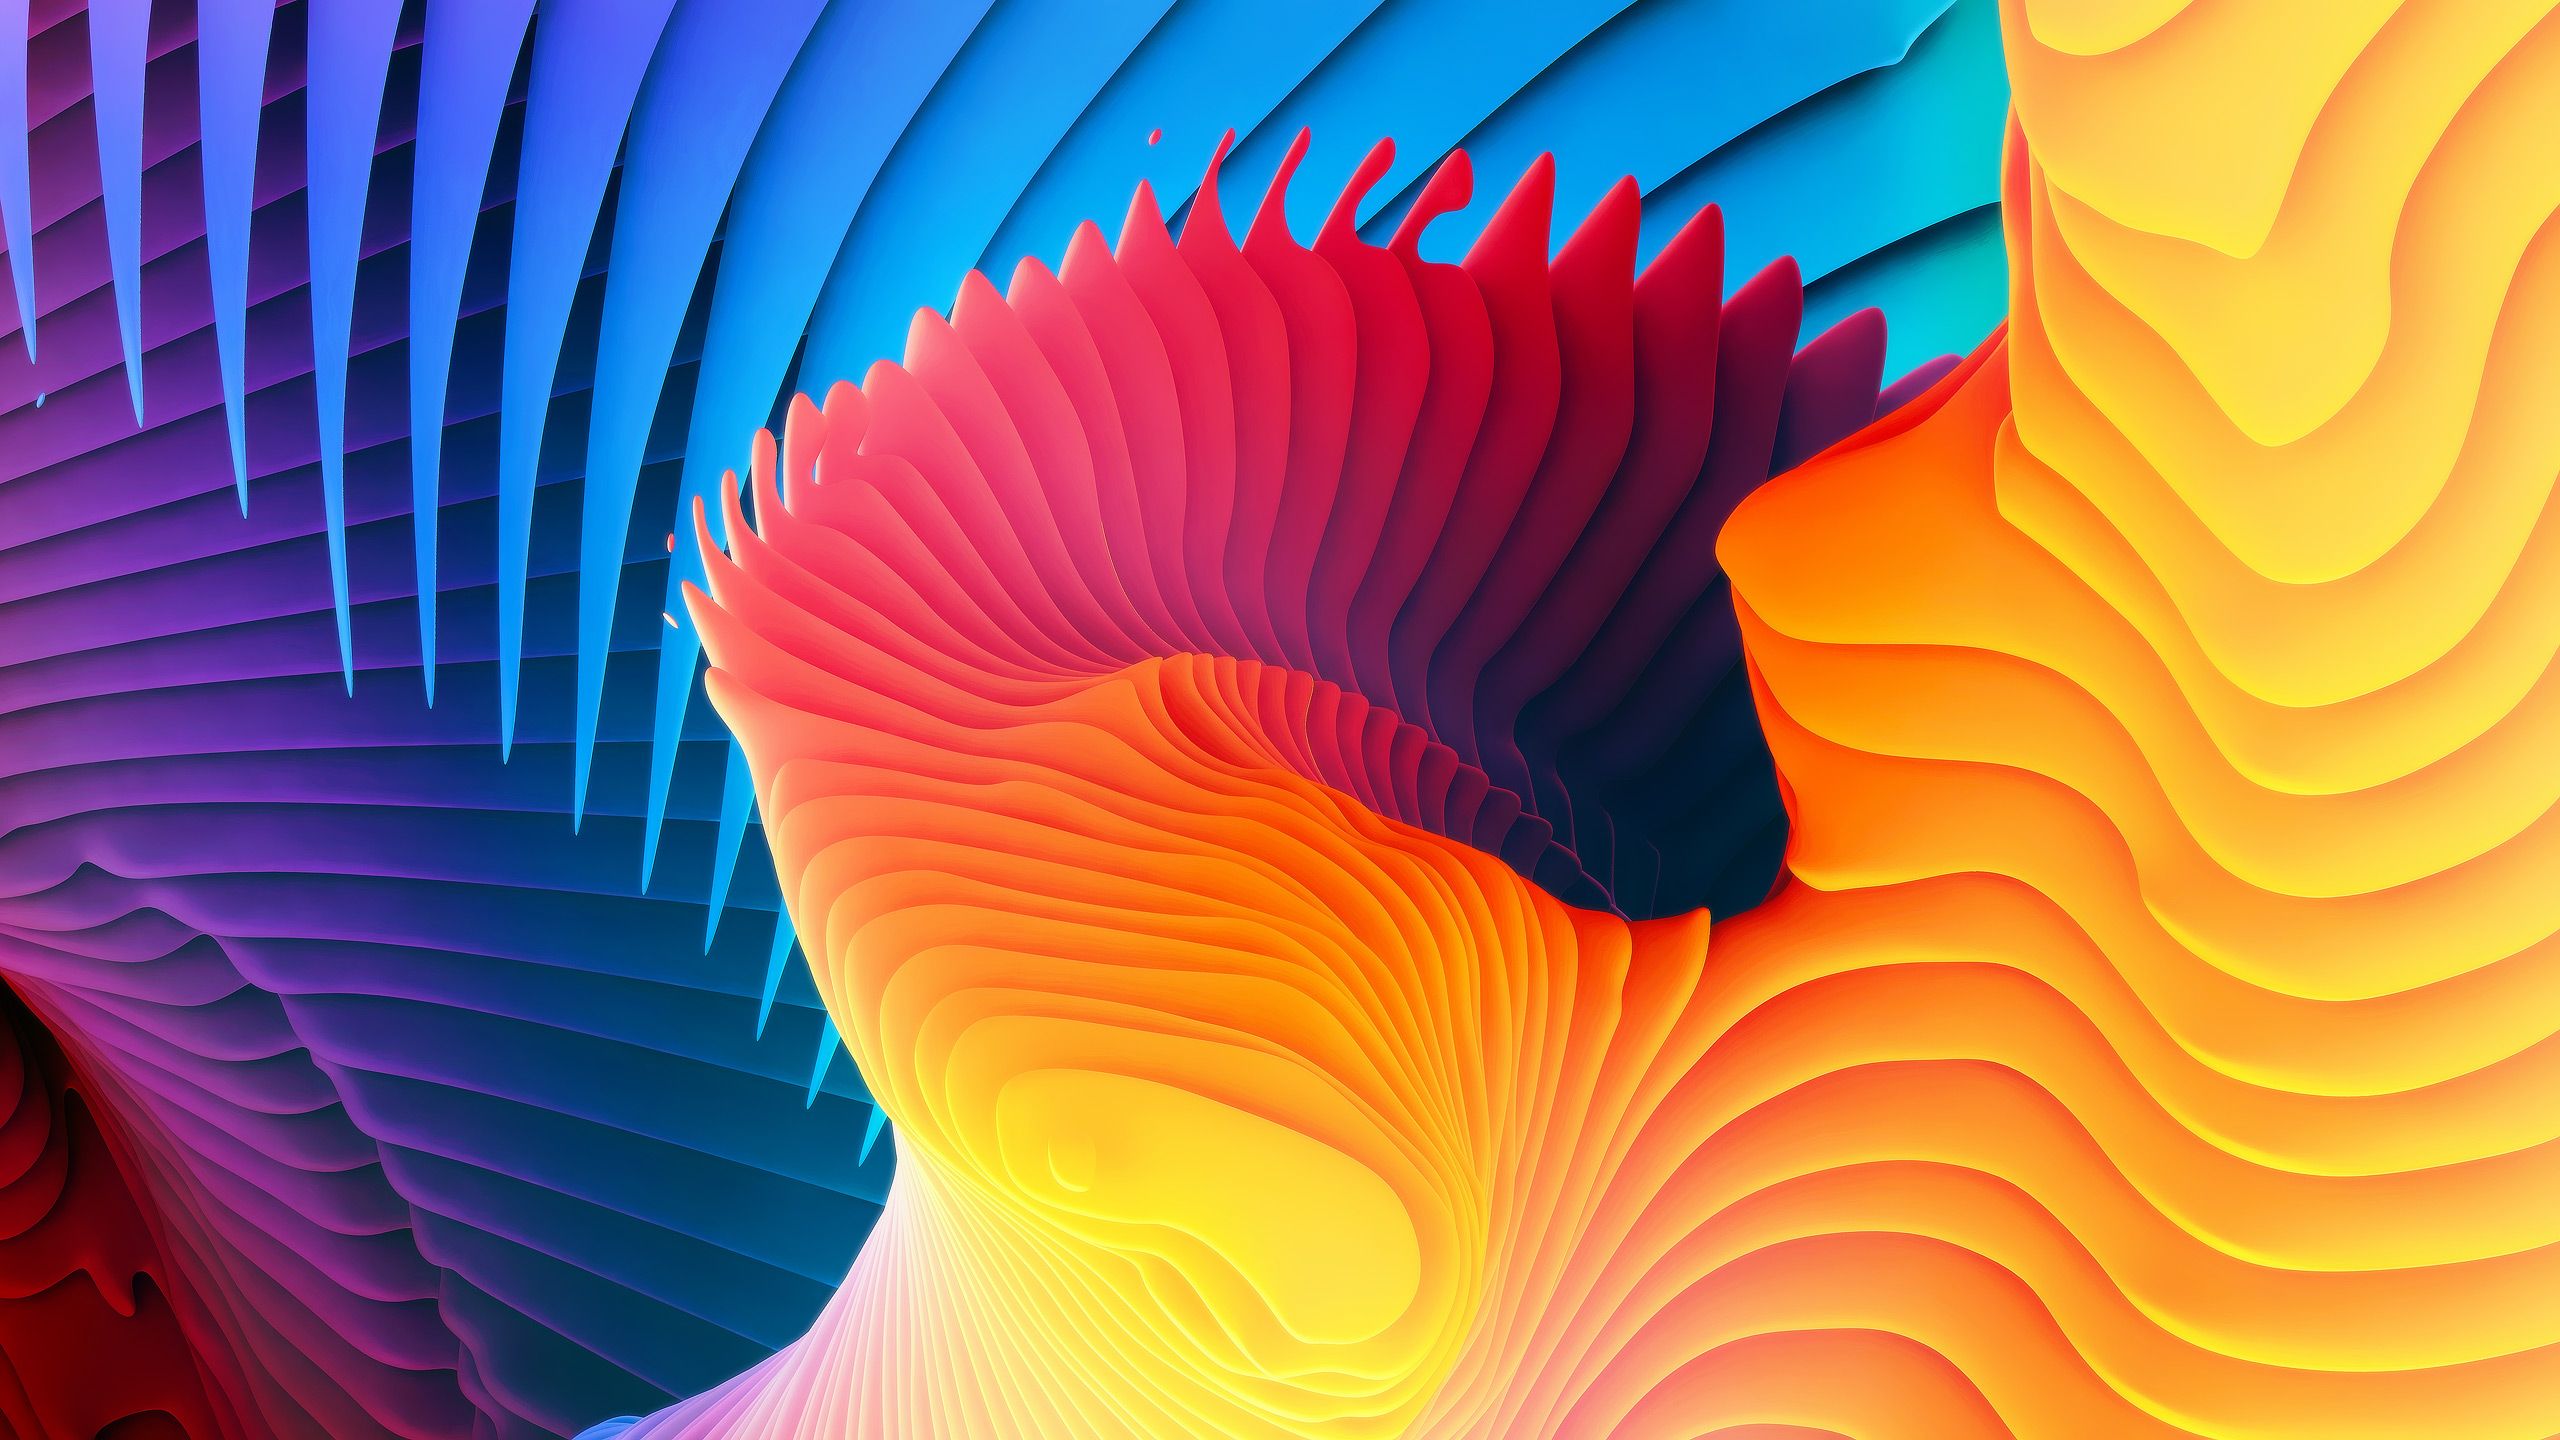 Spectrum 4K Wallpaper, Spiral, Colorful, Symmetric, Rhythm, HD, Abstract